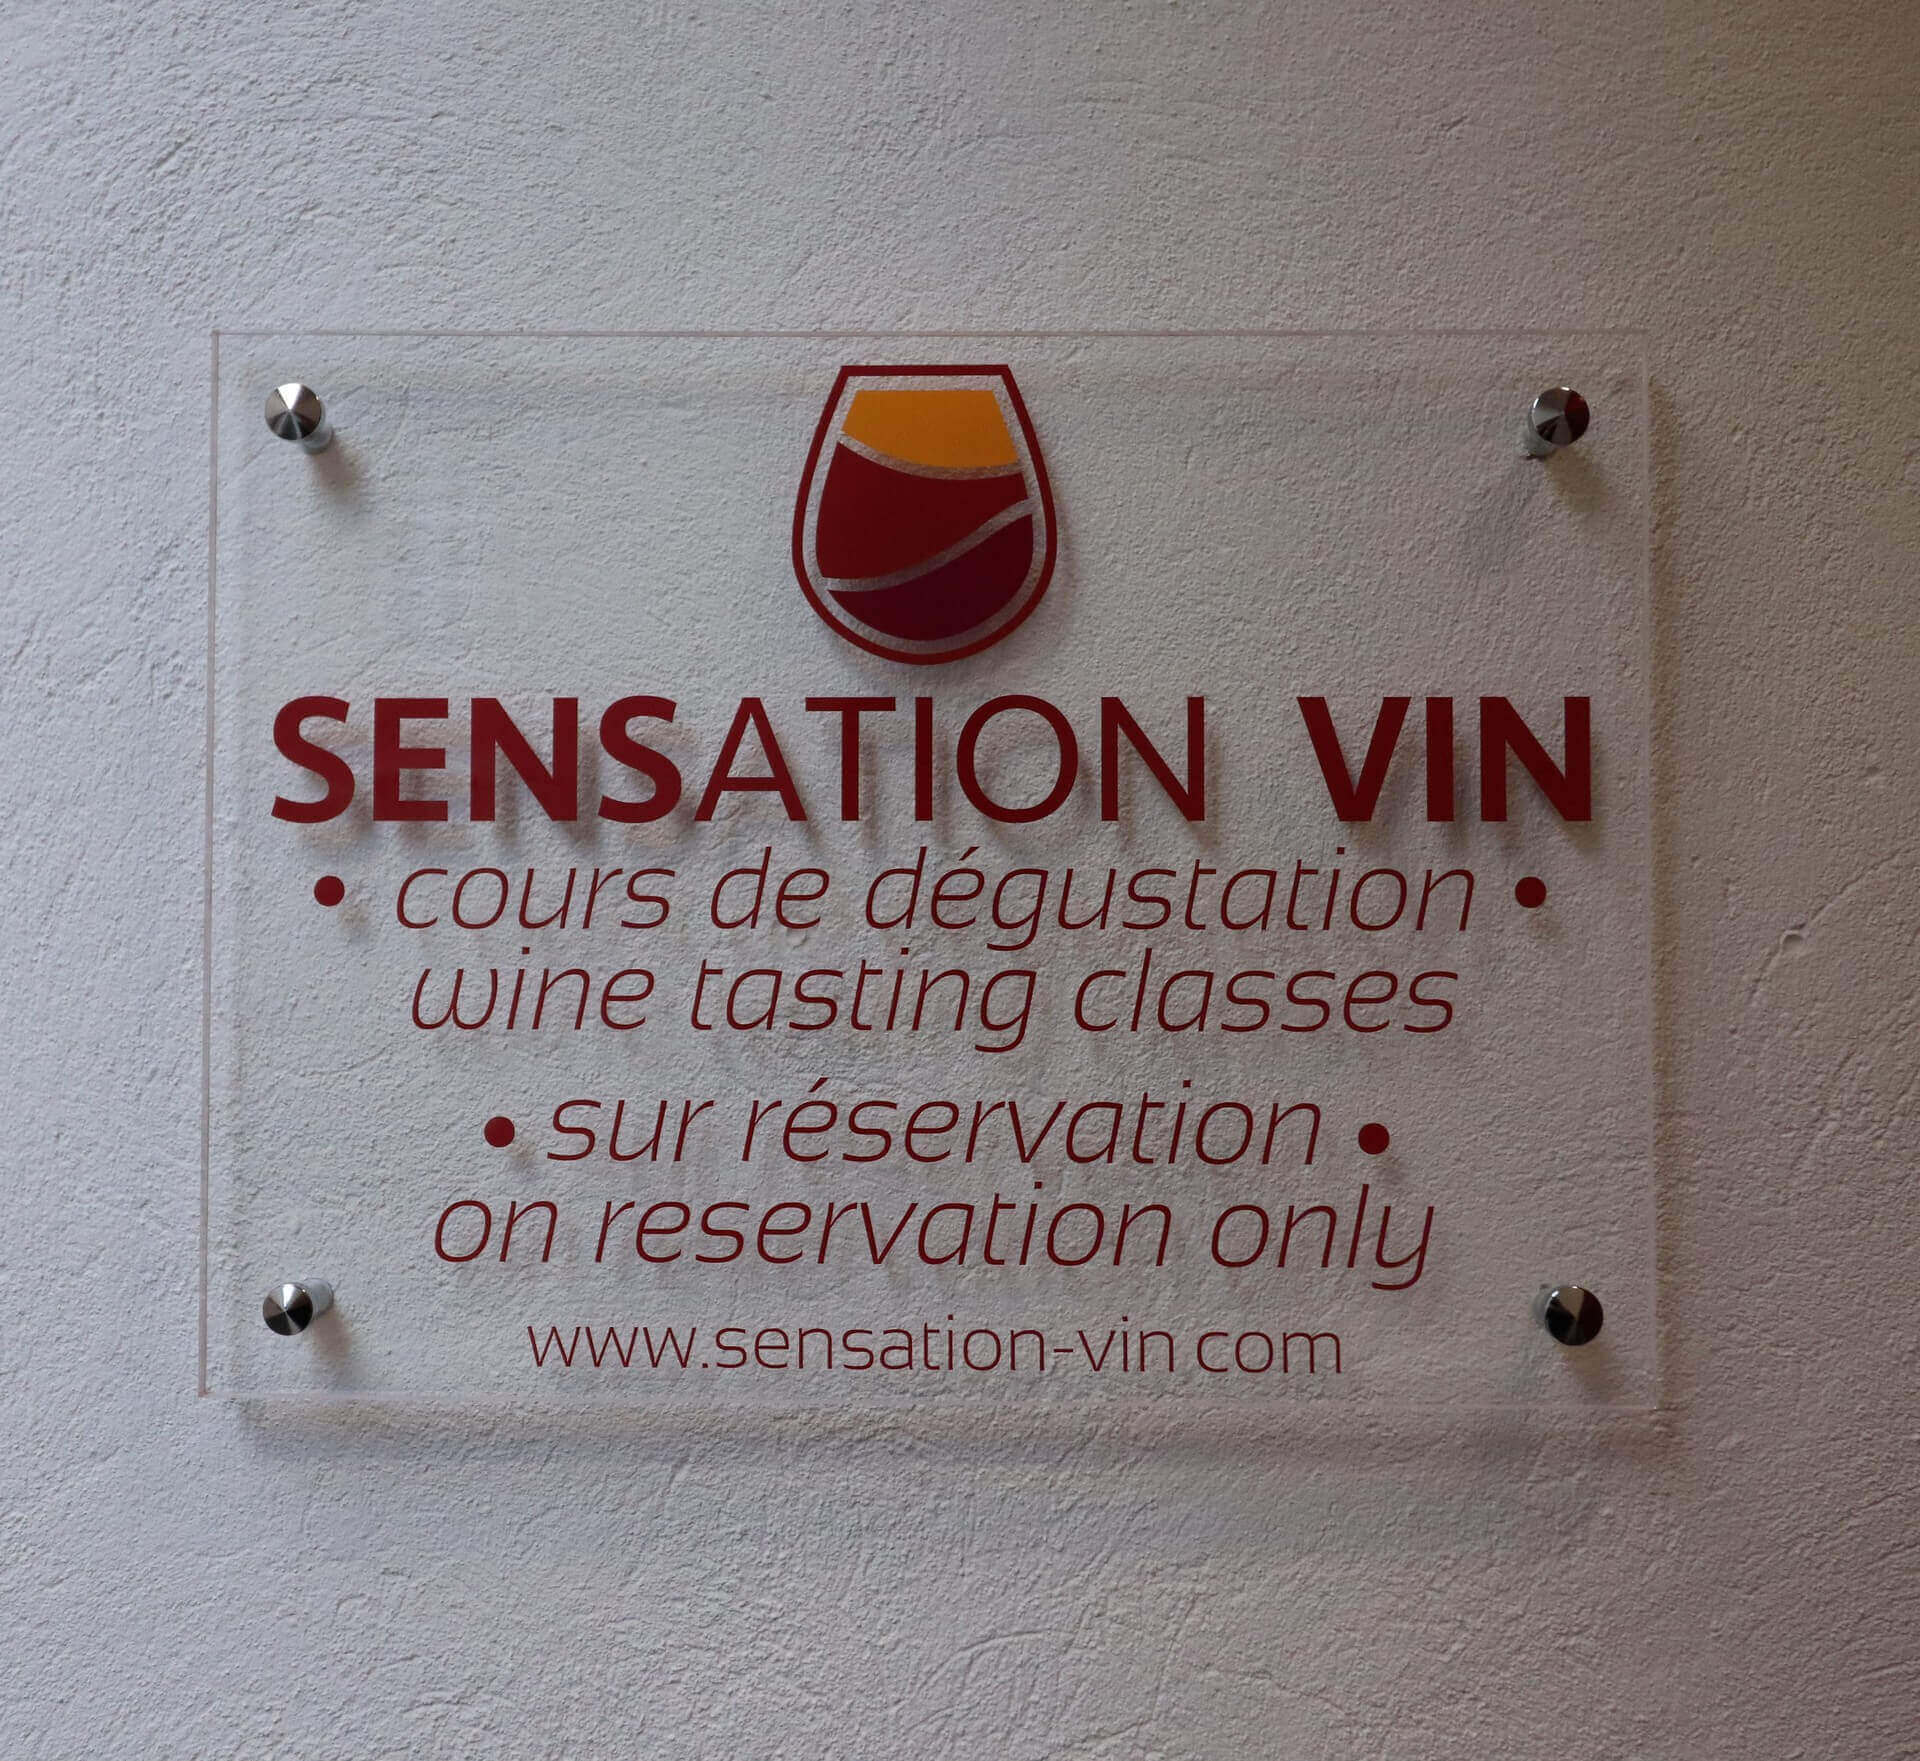 Sensation Vin offers wine tasting classes in 2A Rue Paul Bouchard, in Beaune's historic center.